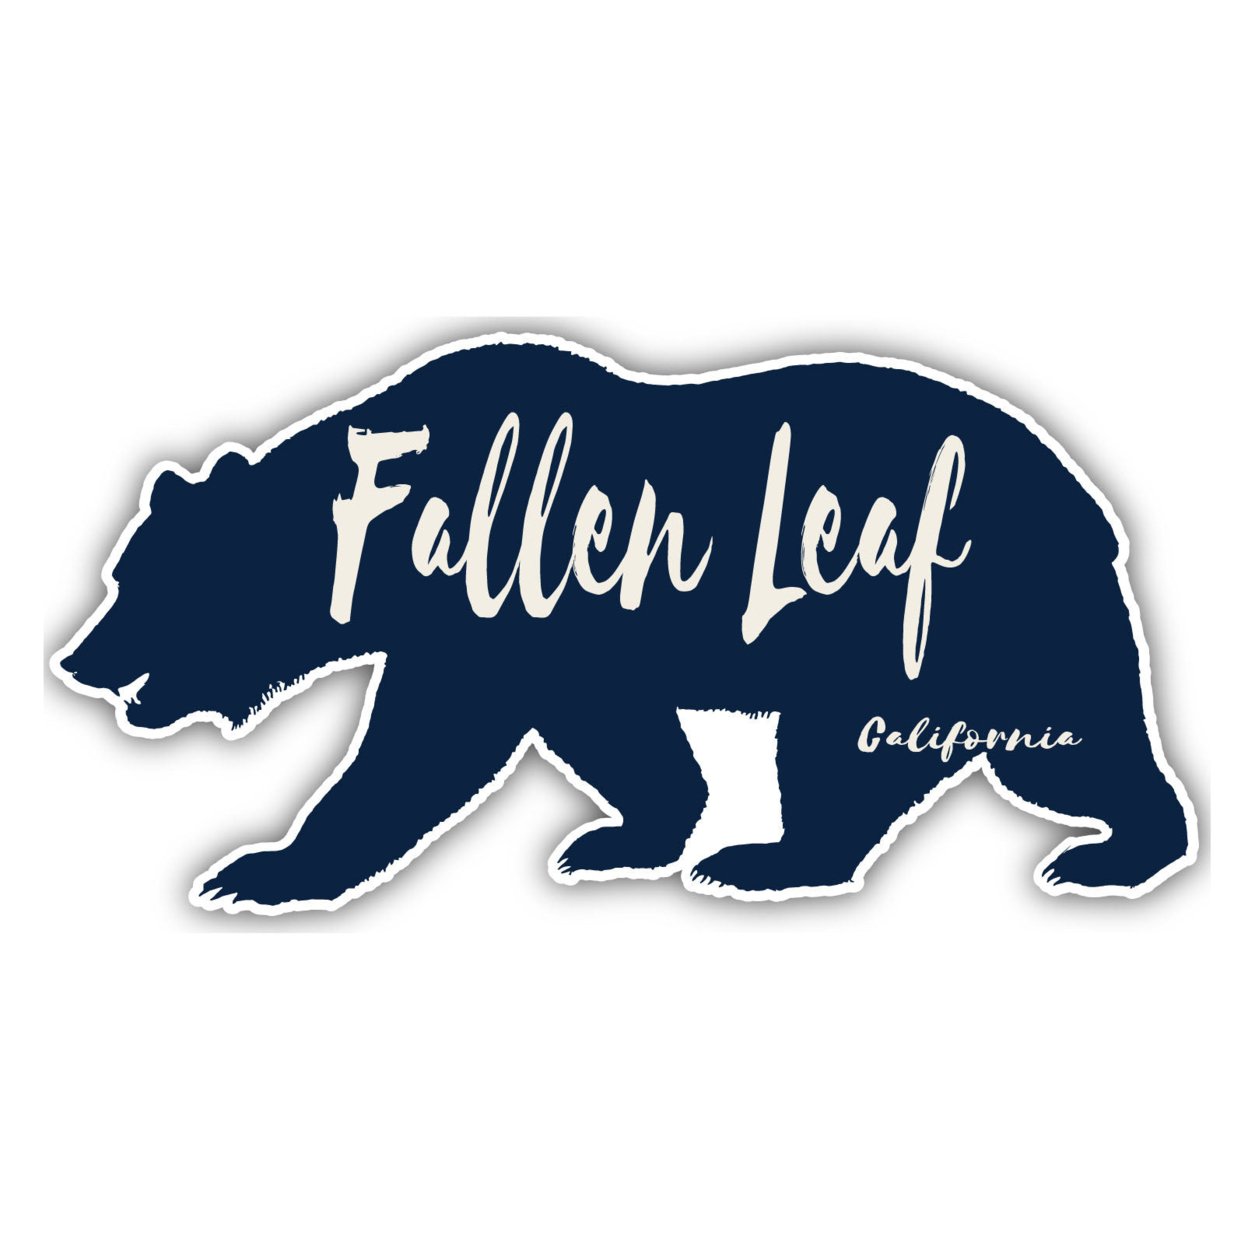 Fallen Leaf California Souvenir Decorative Stickers (Choose Theme And Size) - Single Unit, 6-Inch, Bear